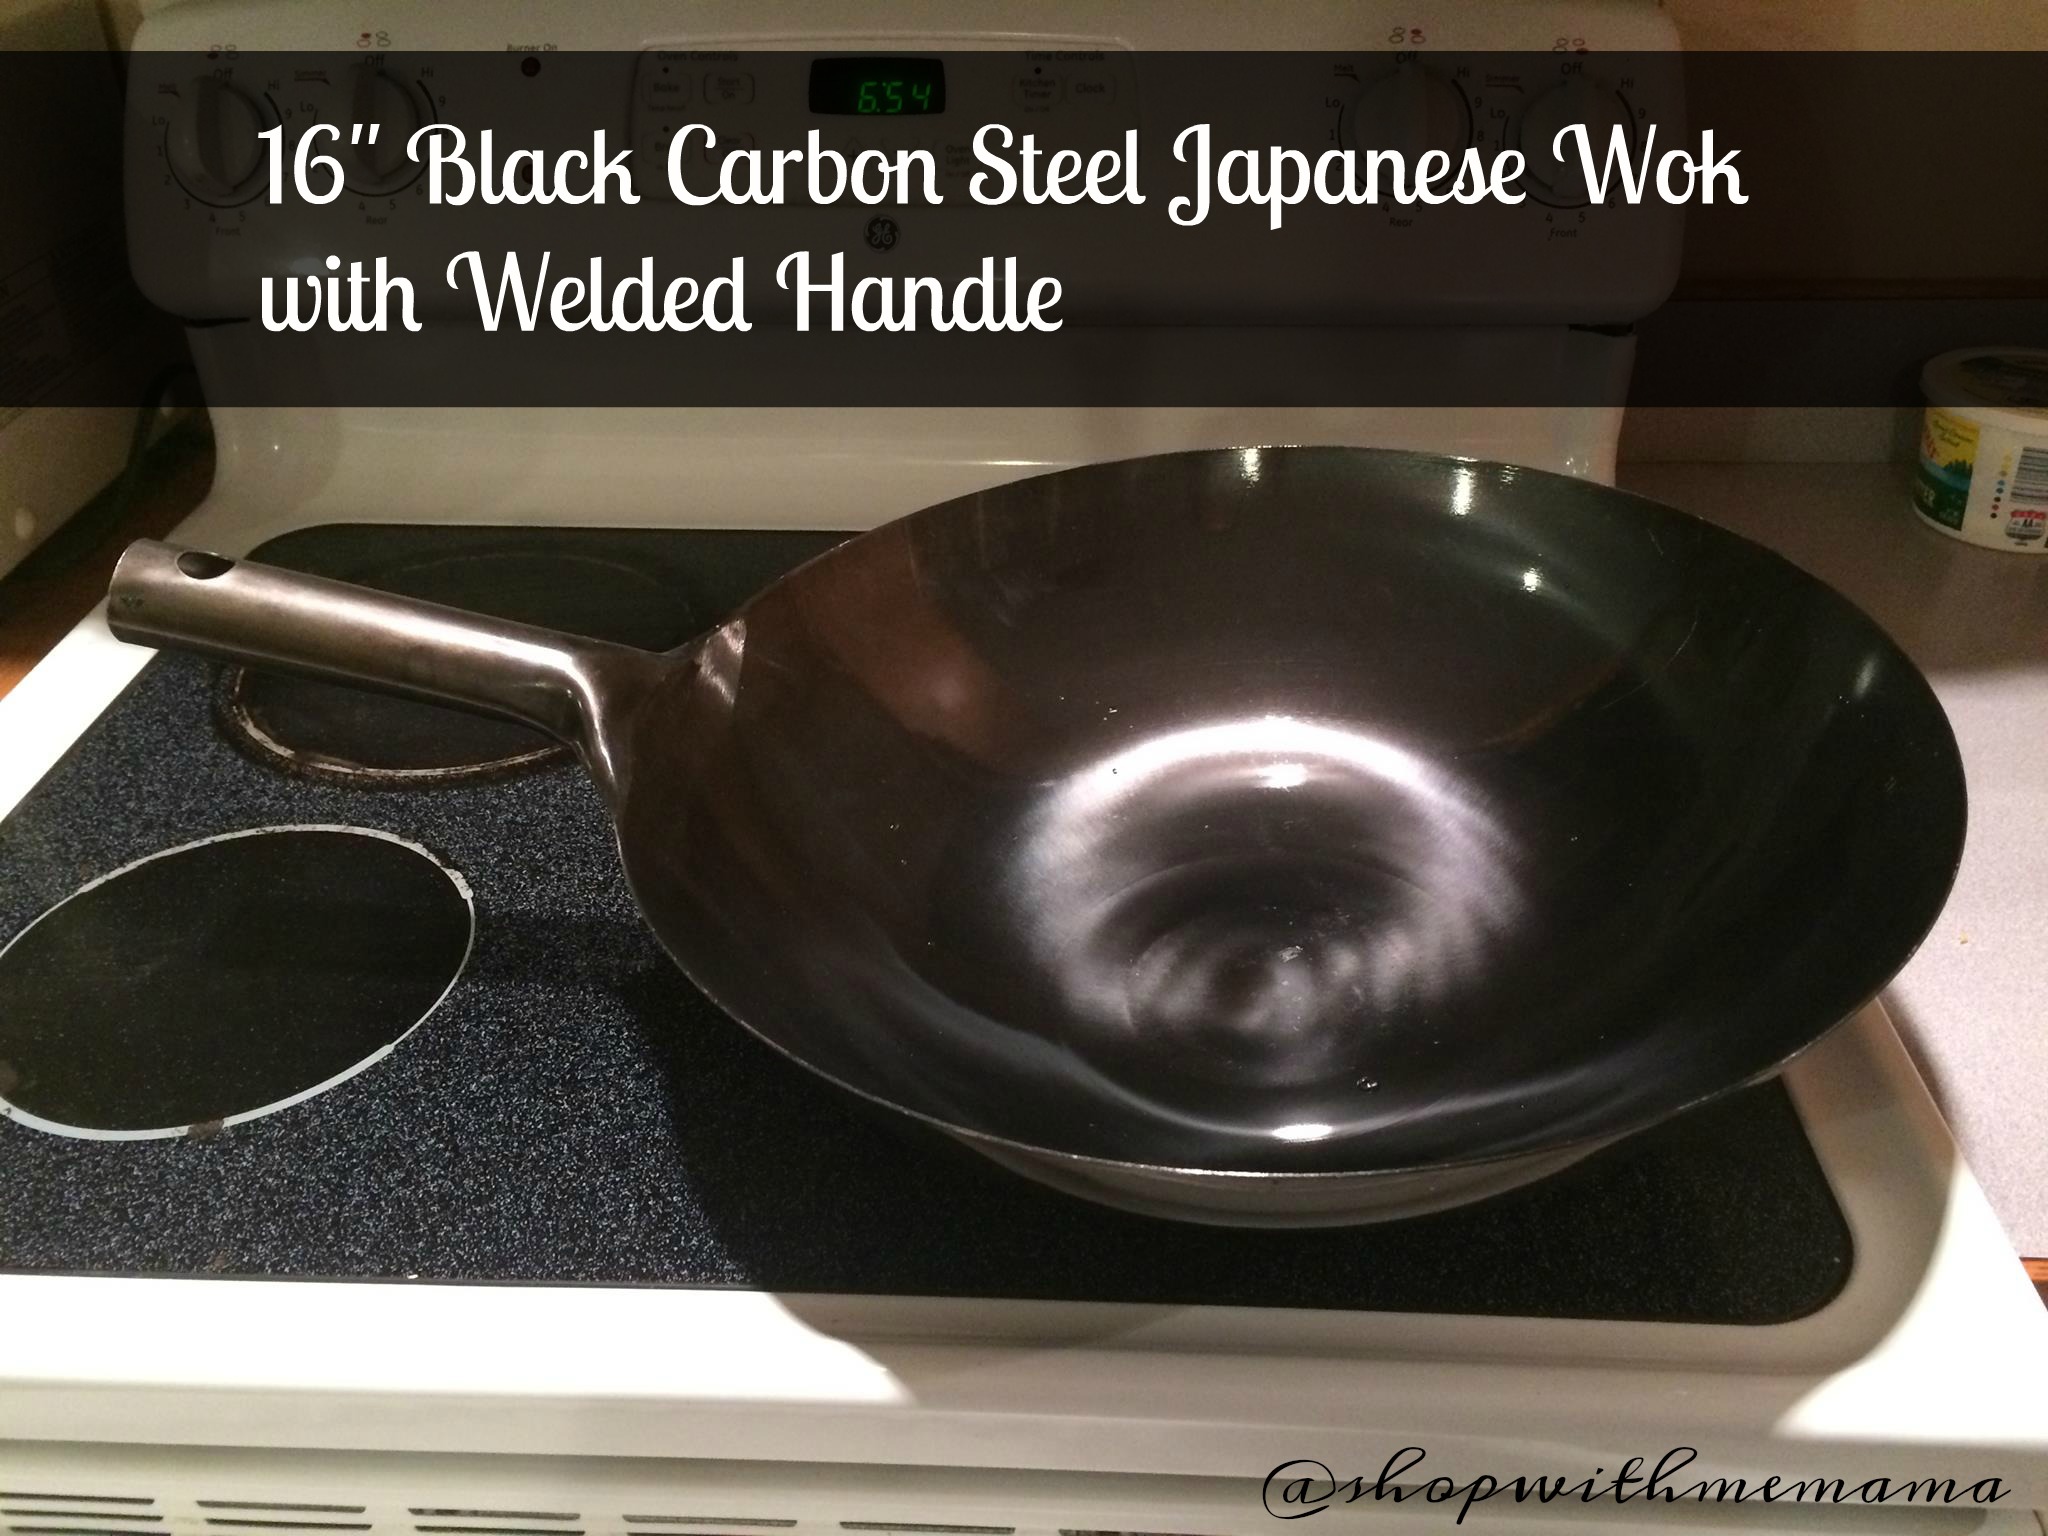 16" Black Carbon Steel Japanese Wok with Welded Handle